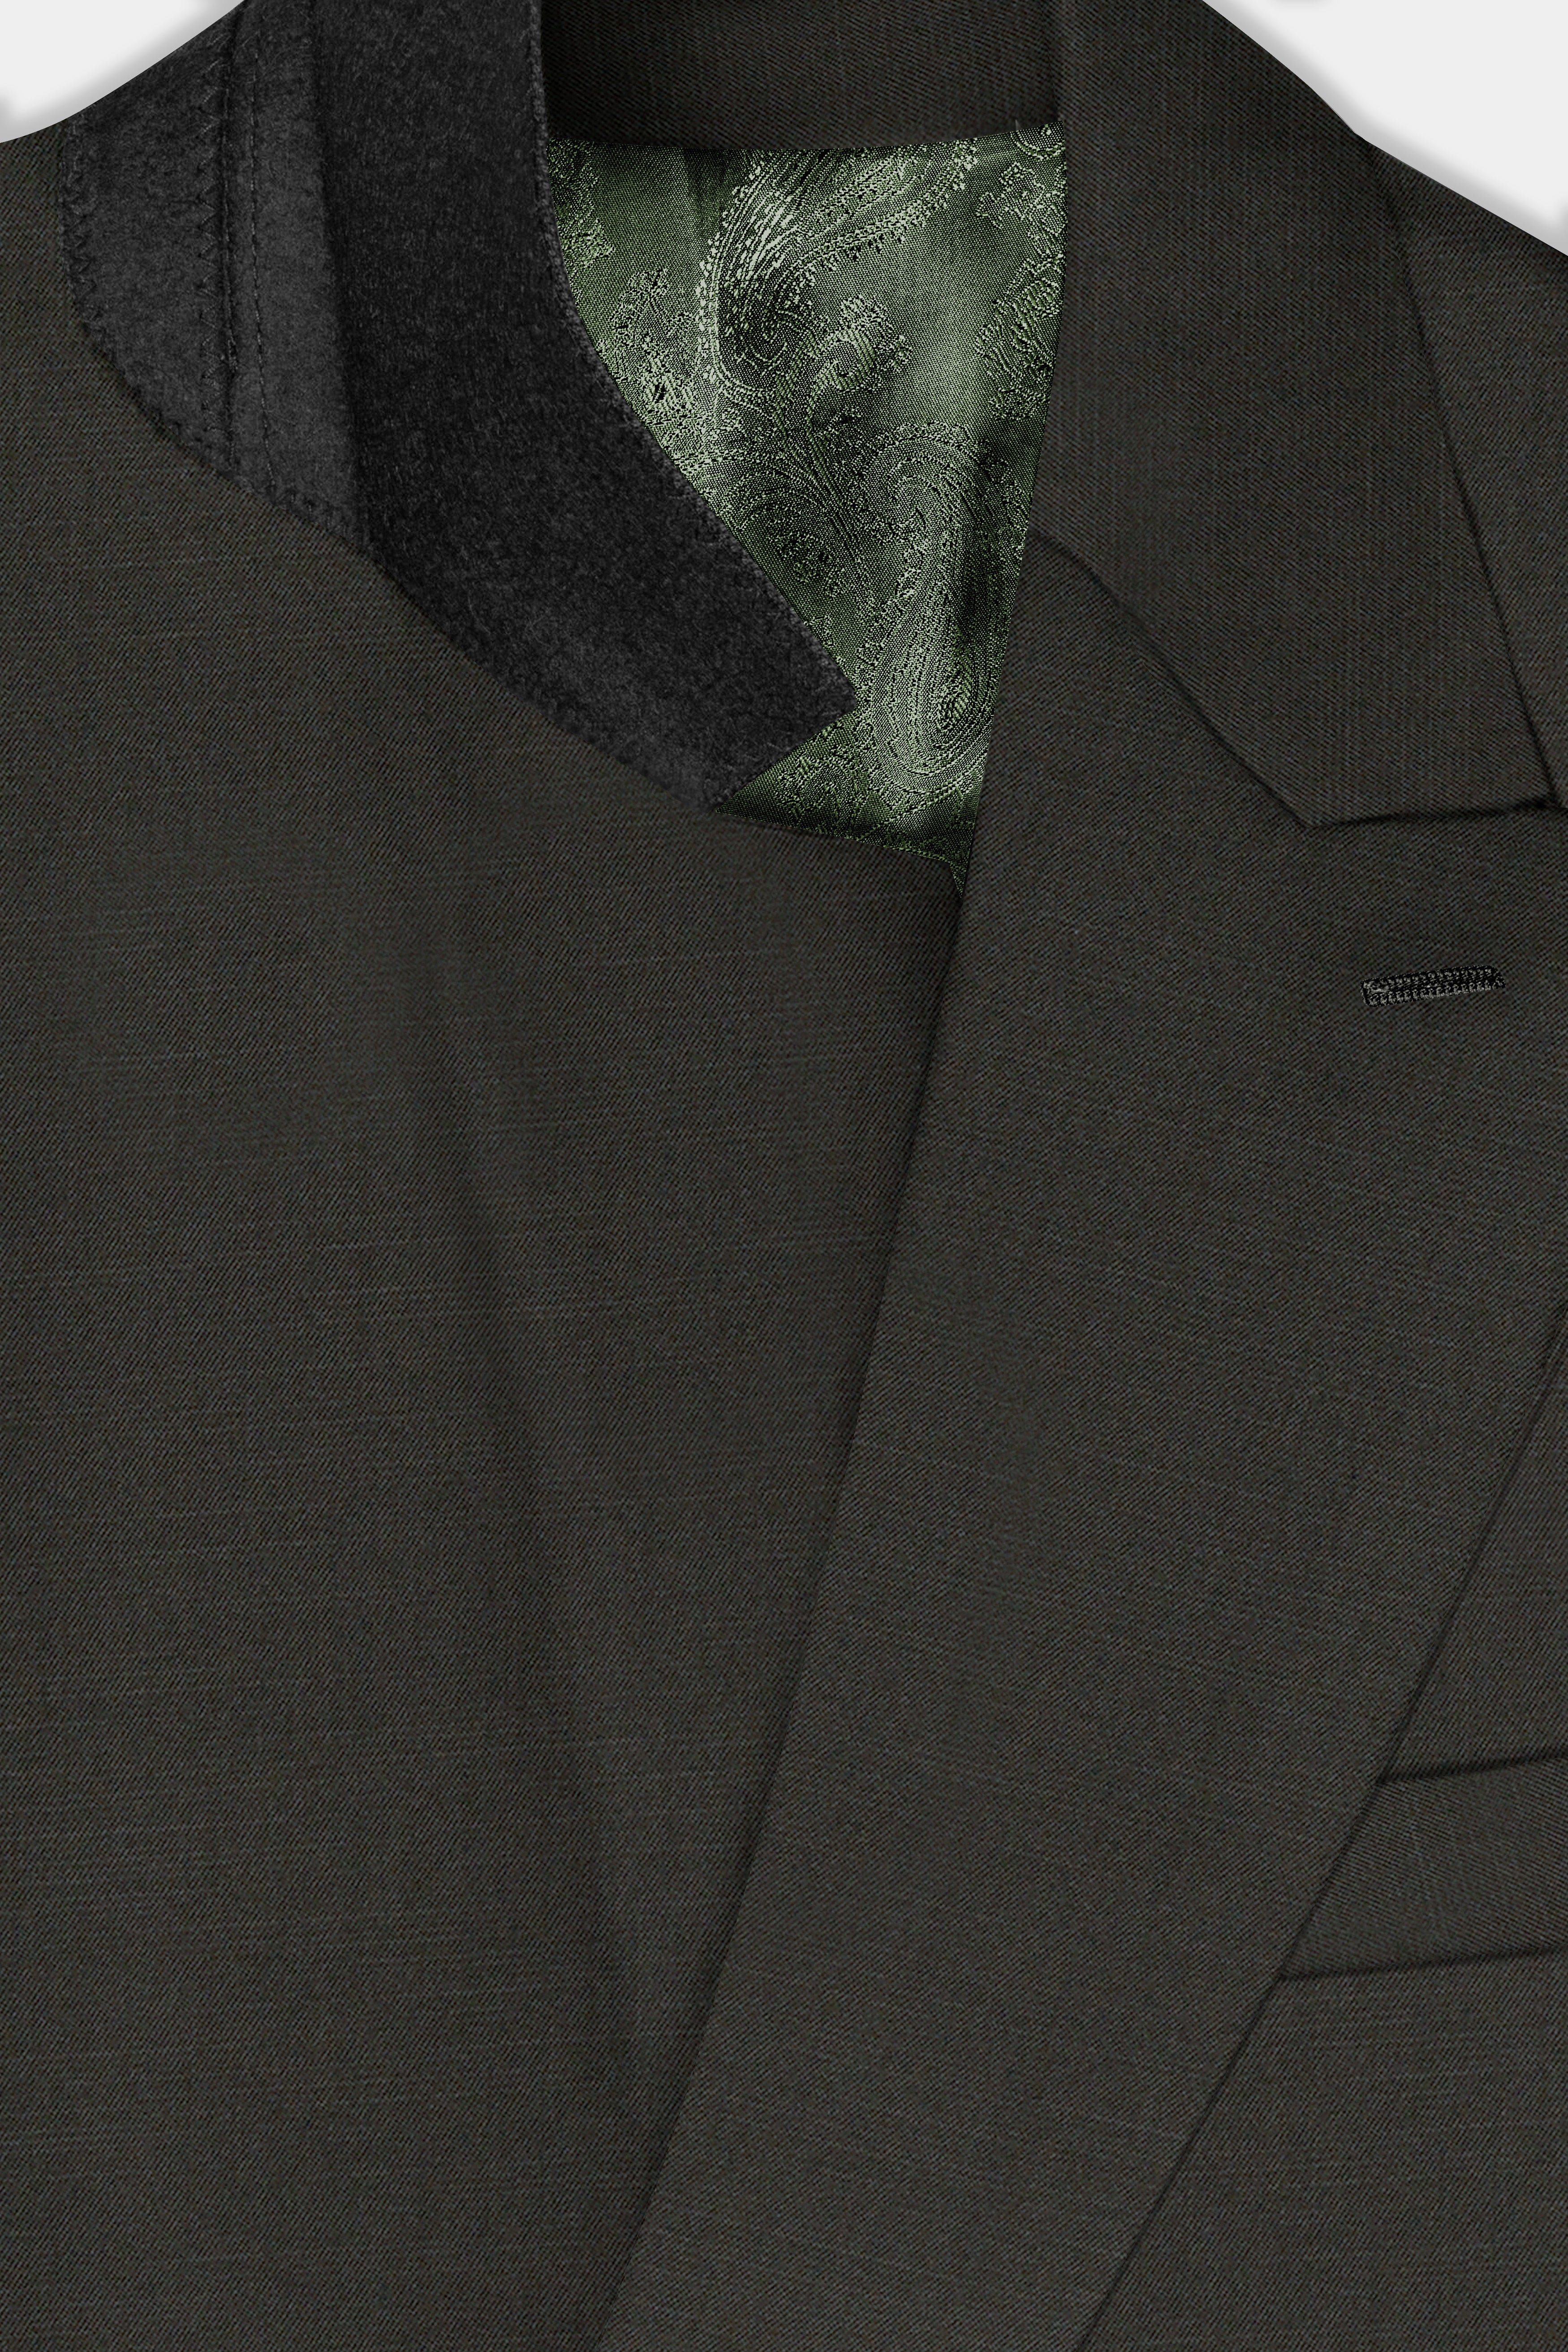 Rangoon Green Wool Blend Double Breasted Blazer